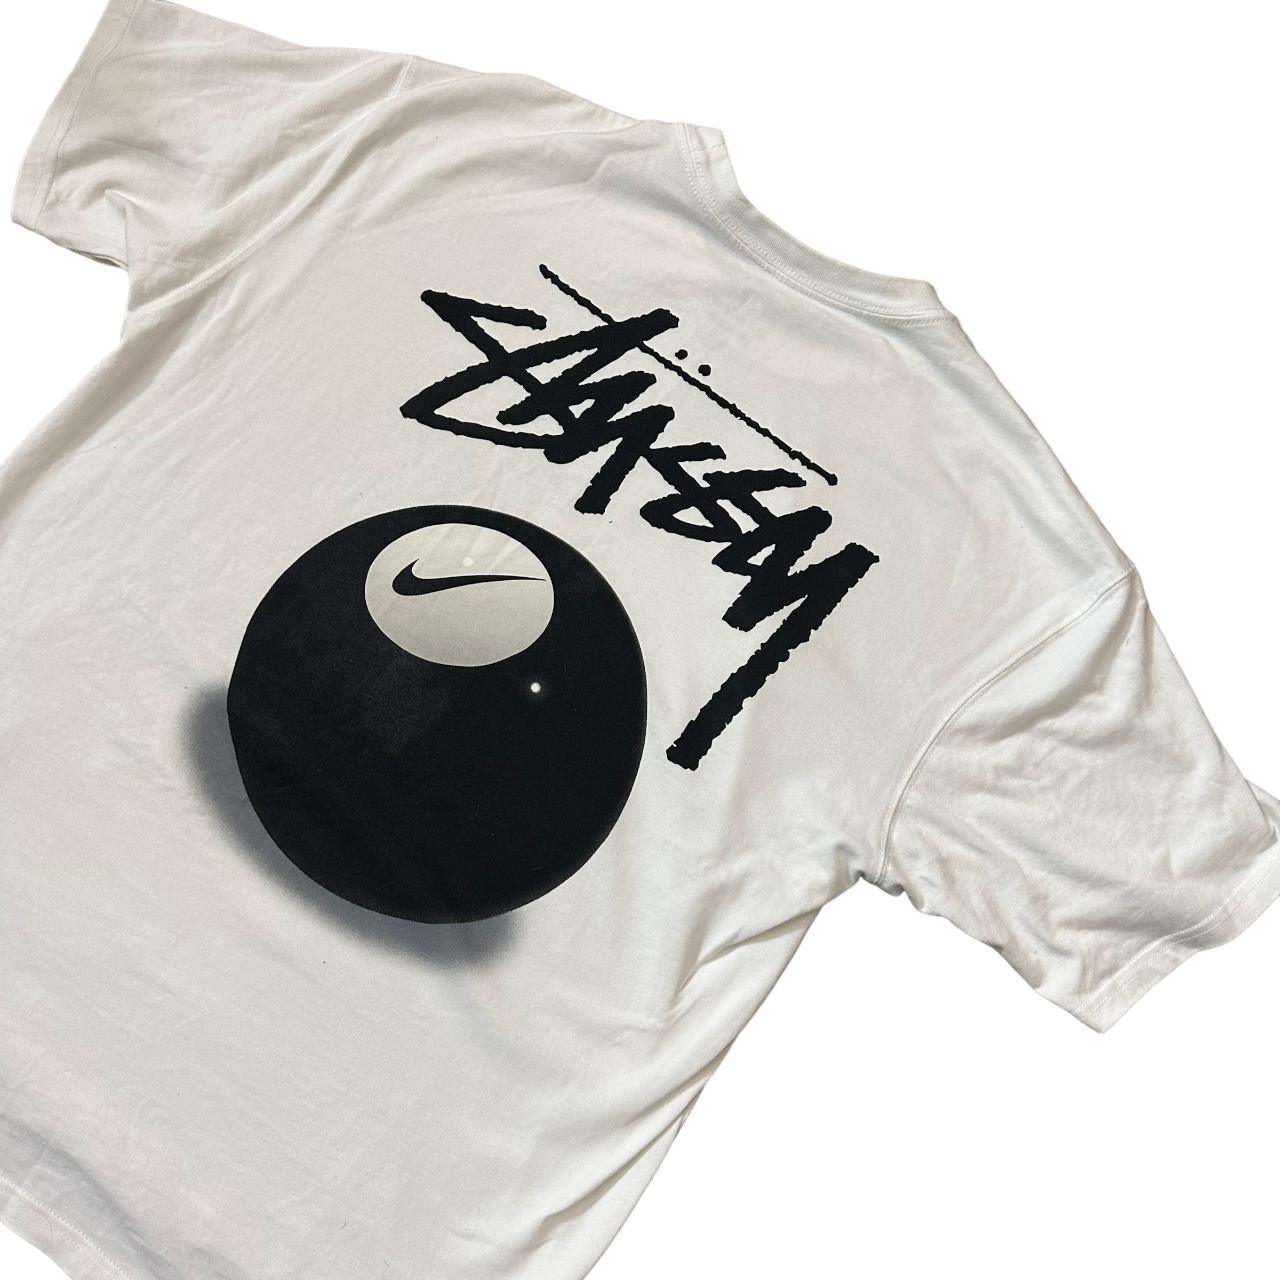 Stussy Nike logo T-shirt - Known Source